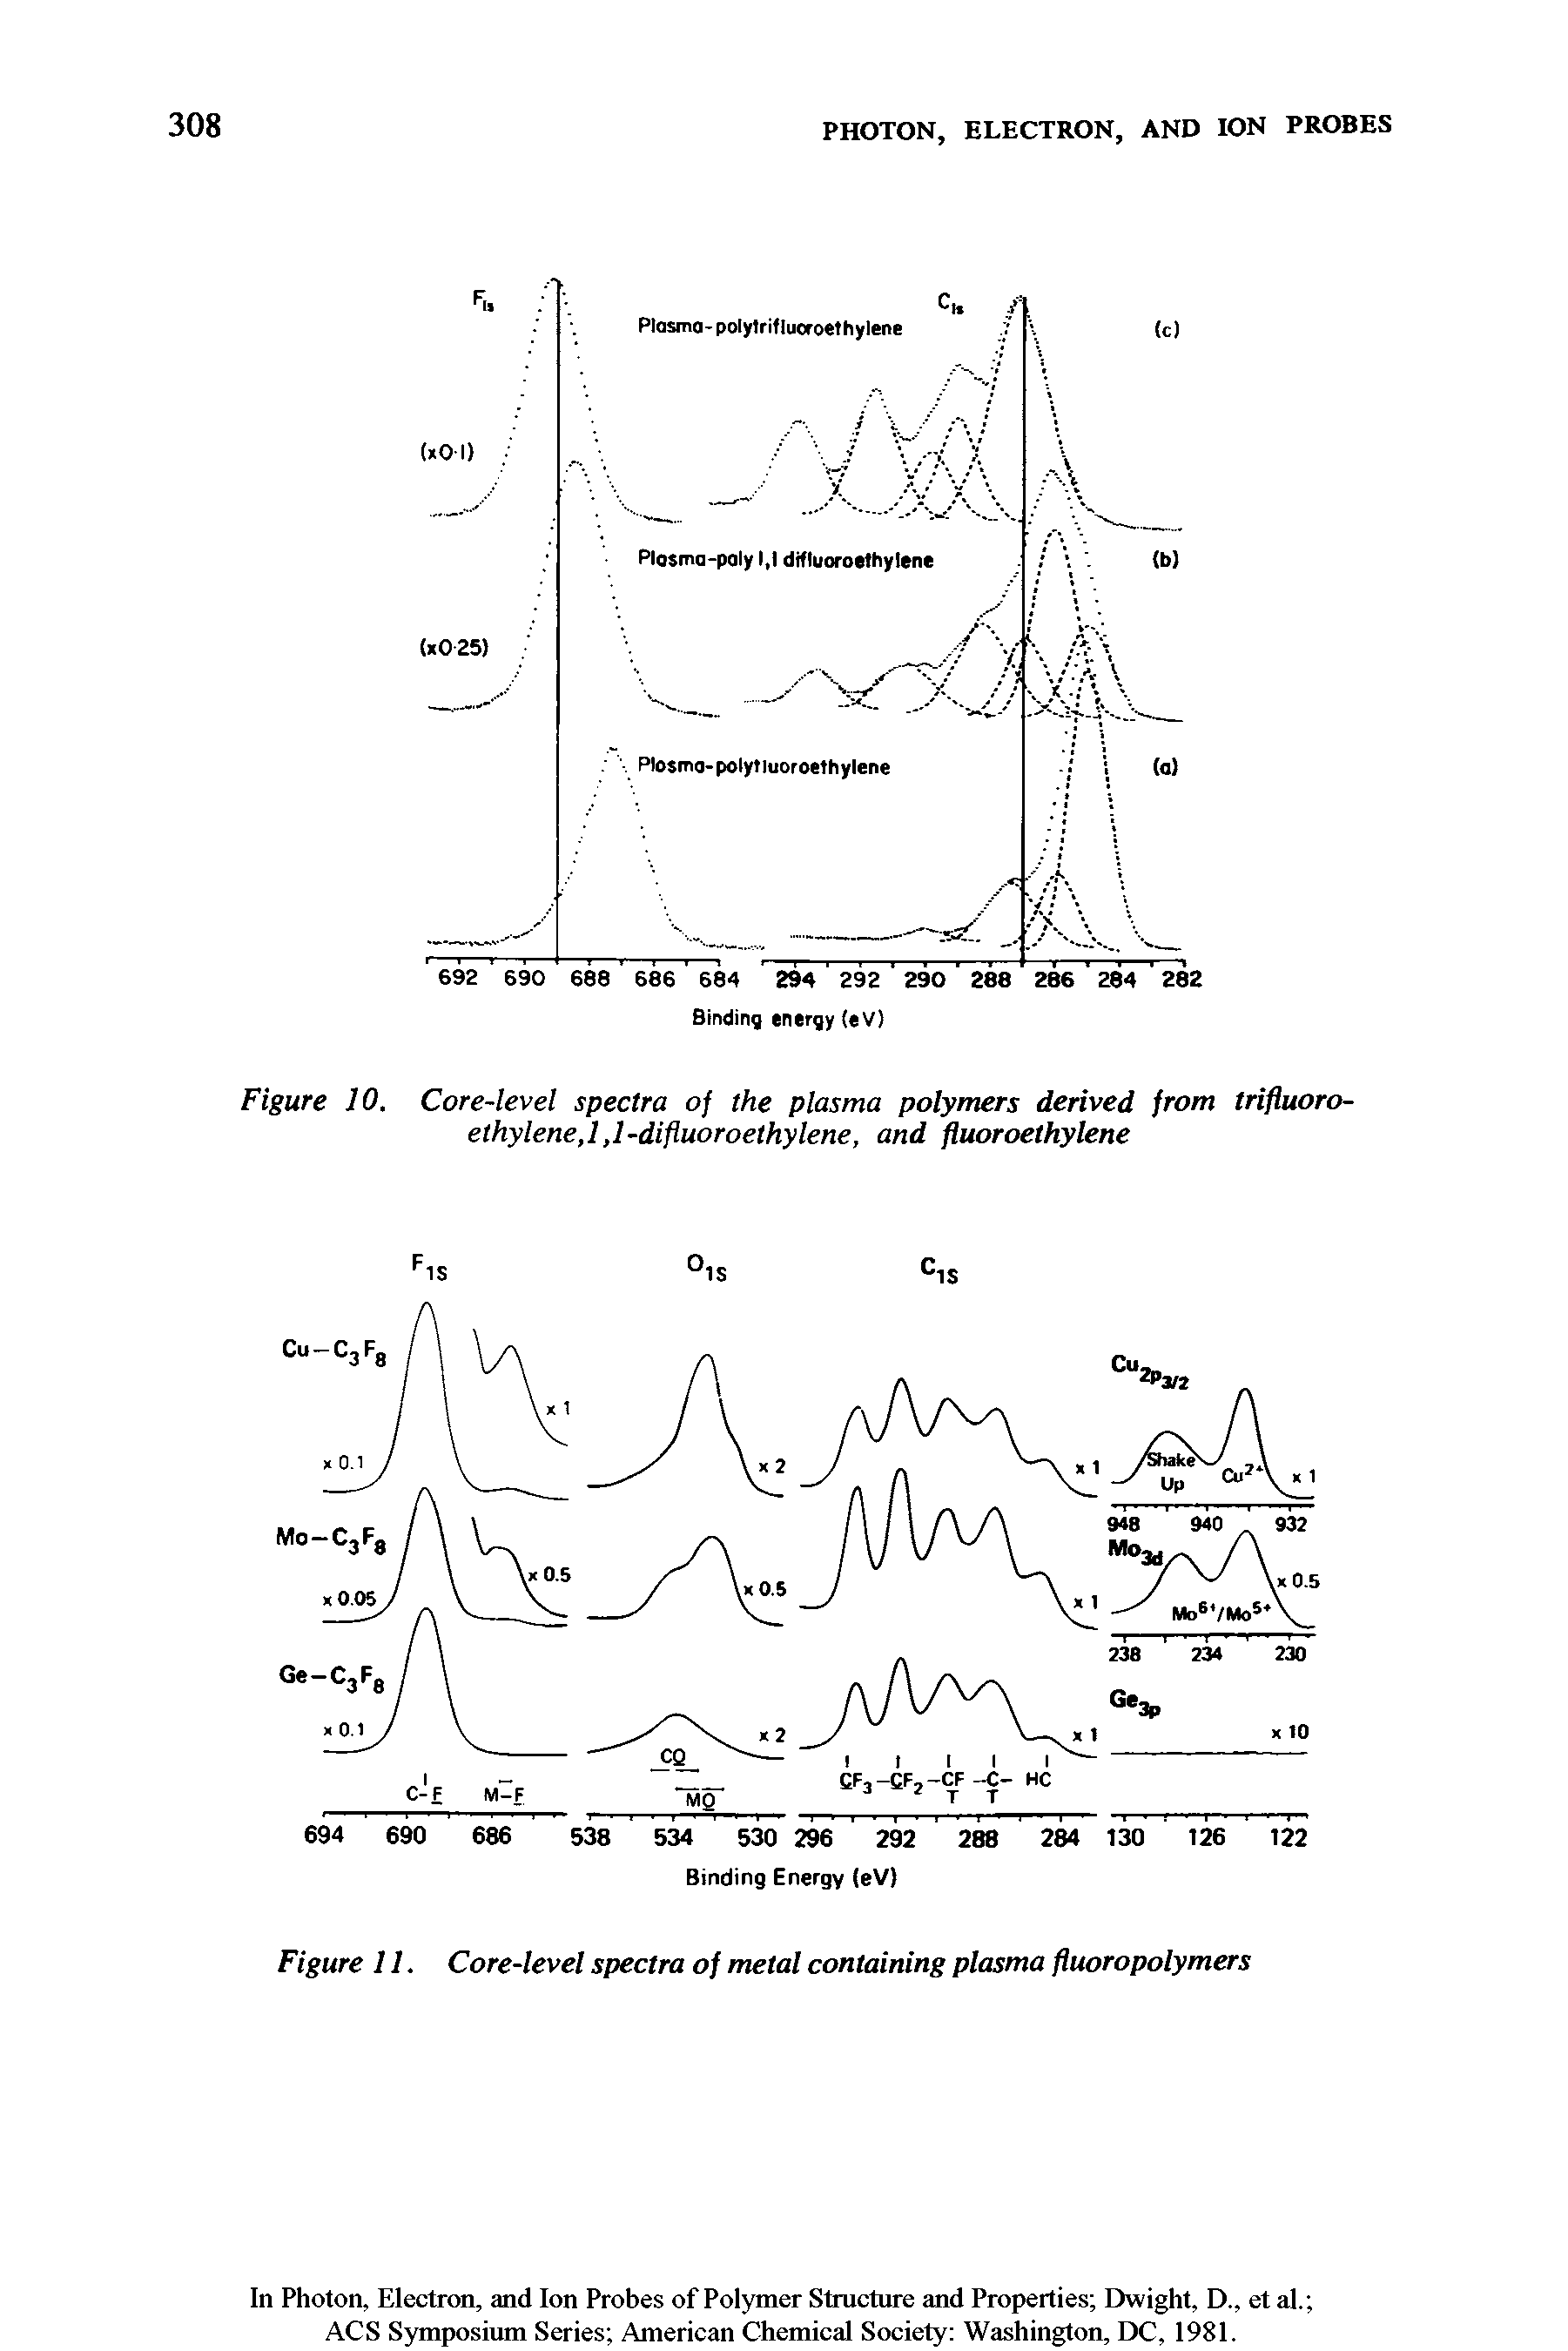 Figure 10. Core-level spectra of the plasma polymers derived from trifiuoro-ethylene, , 1-difiuoroethylene, and fiuoroethylene...